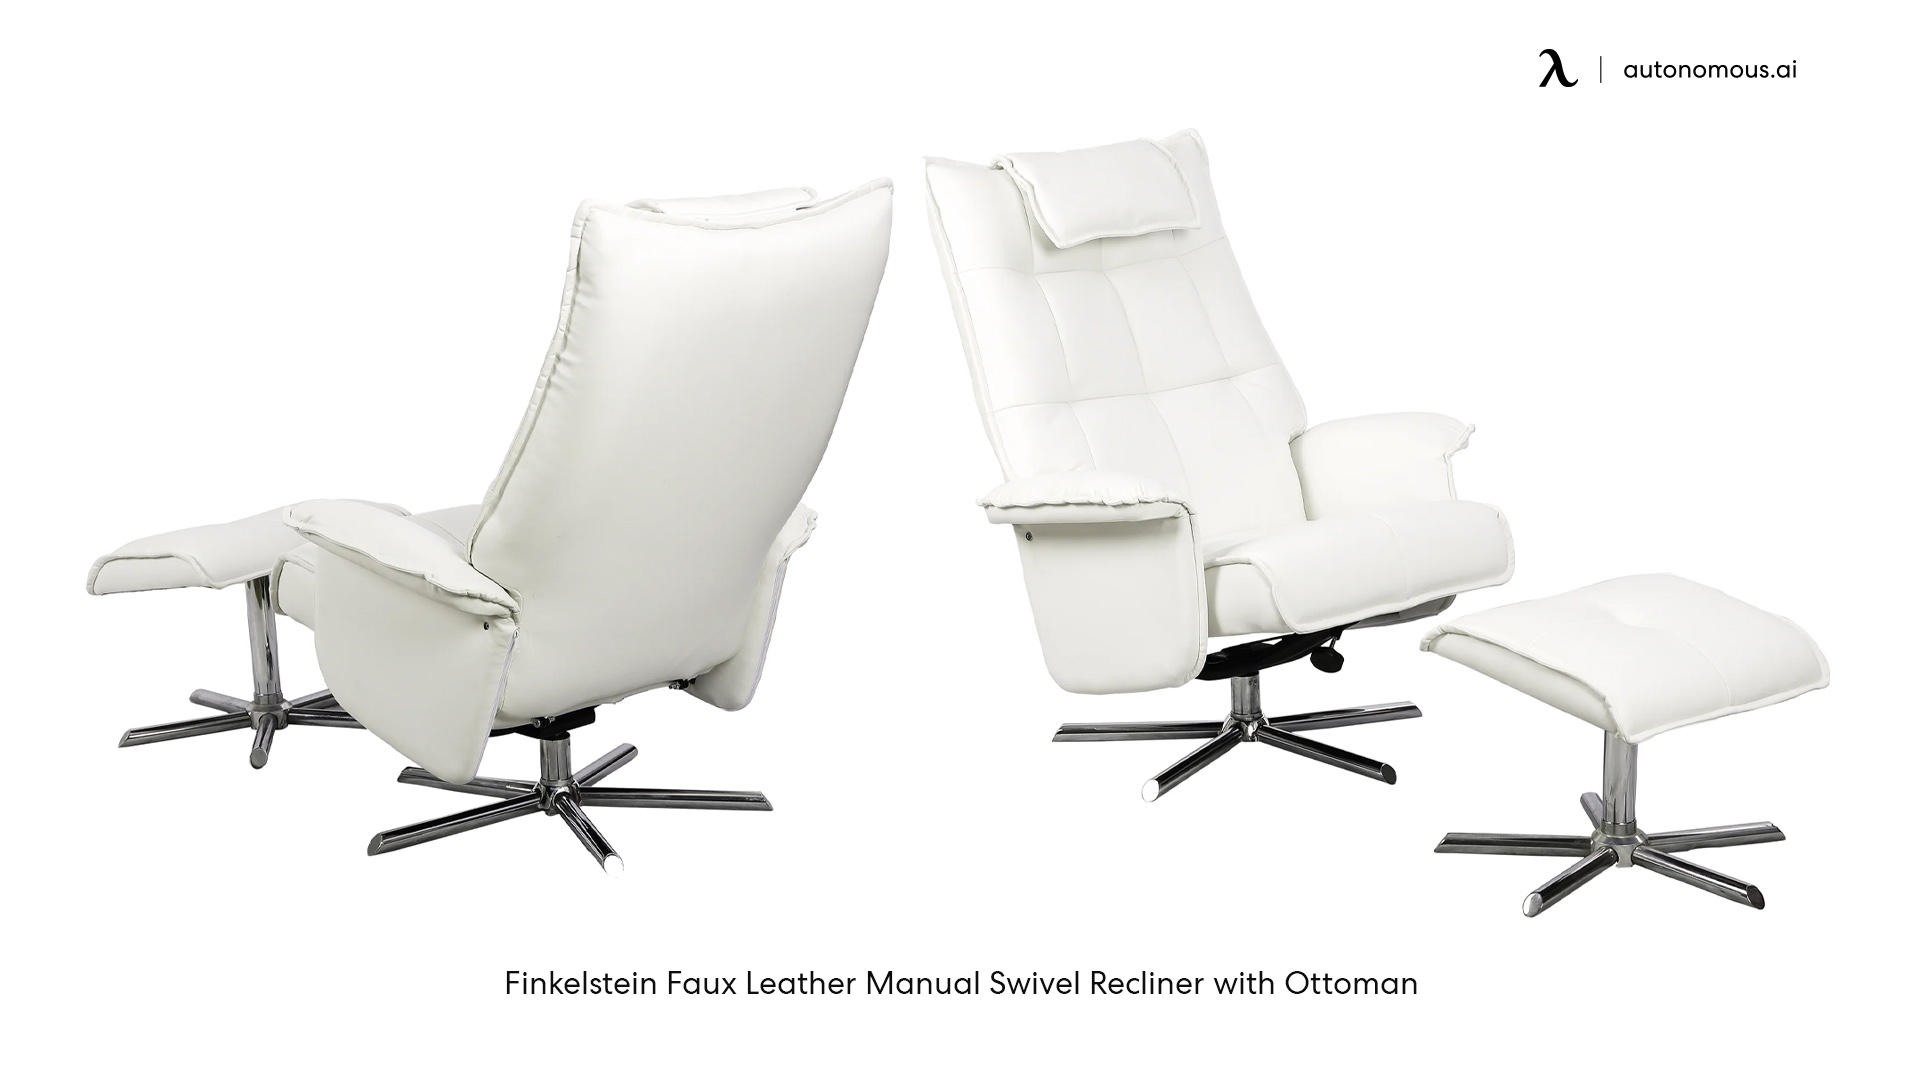 Finkelstein Faux Leather Manual Swivel Recliner with Ottoman